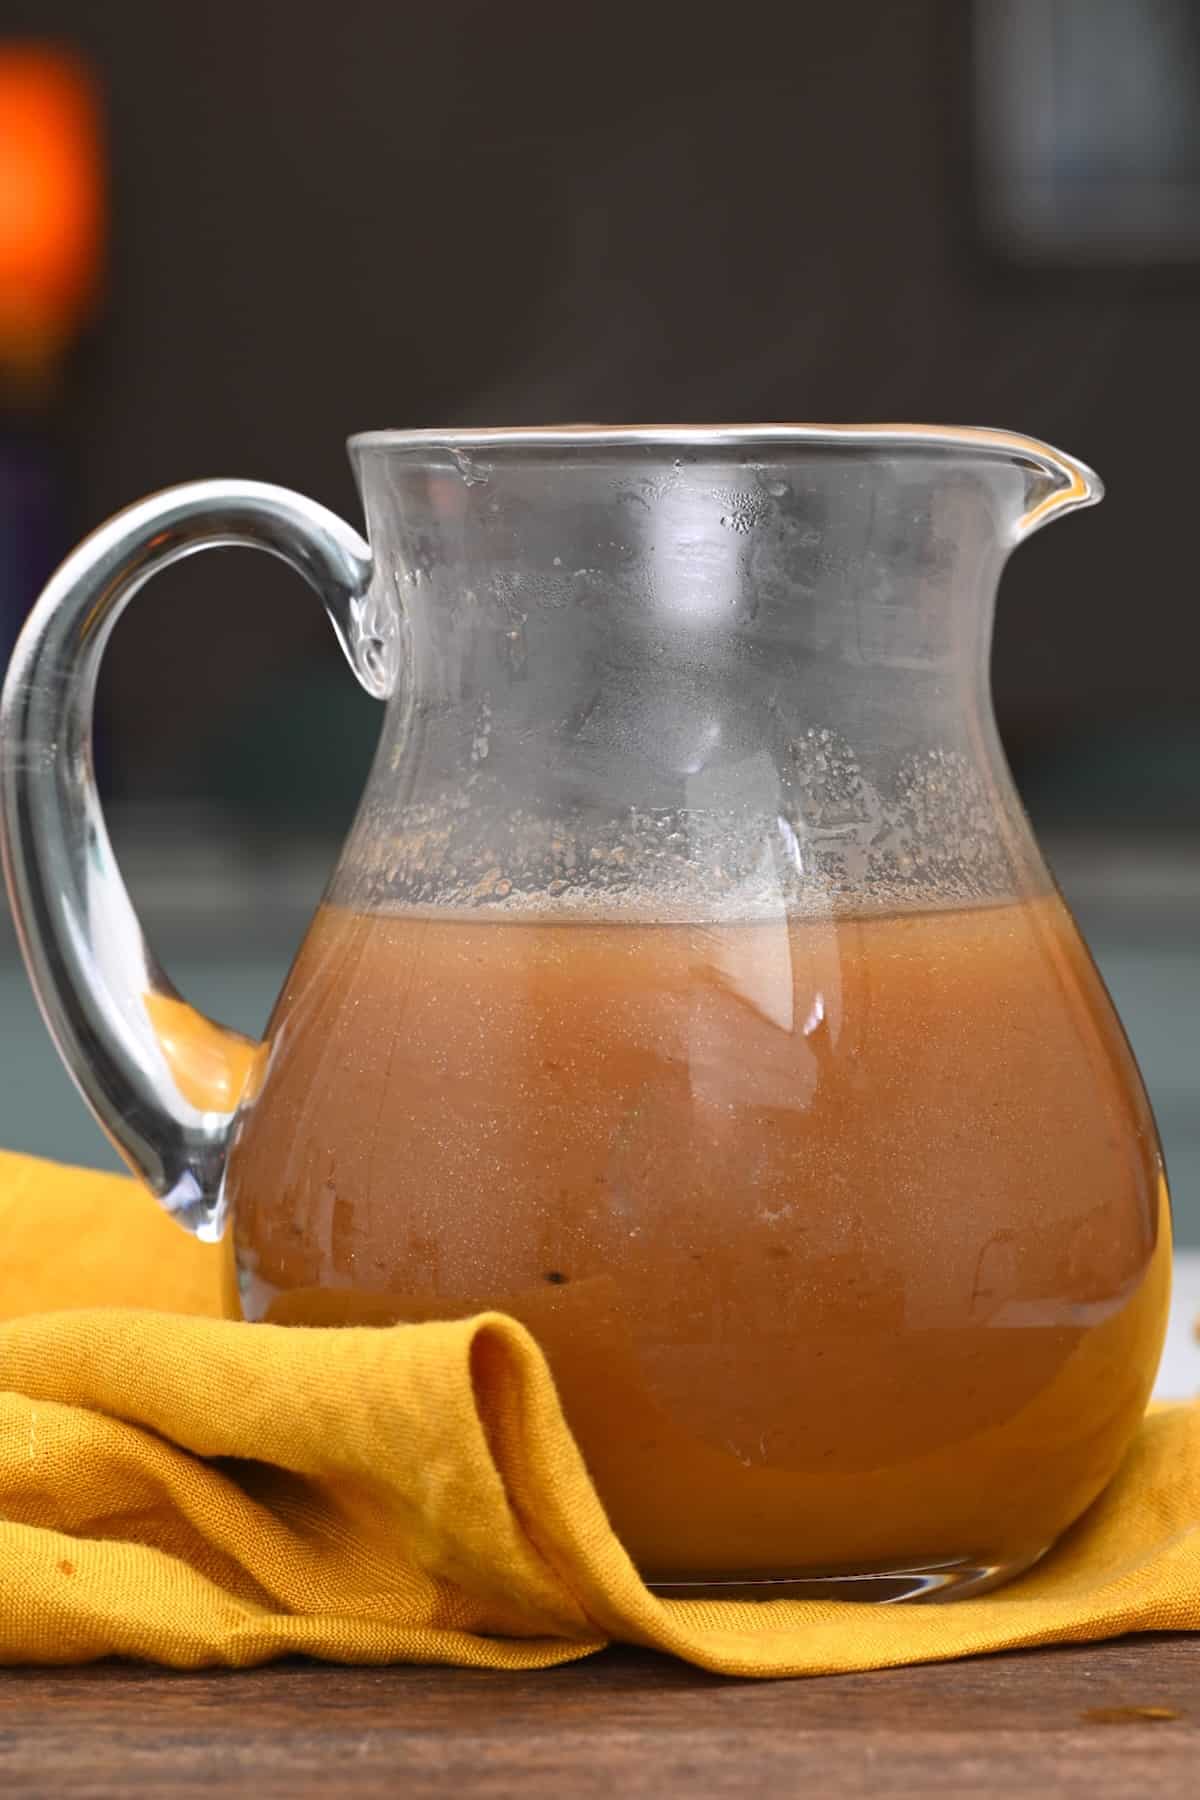 A jug with au jus